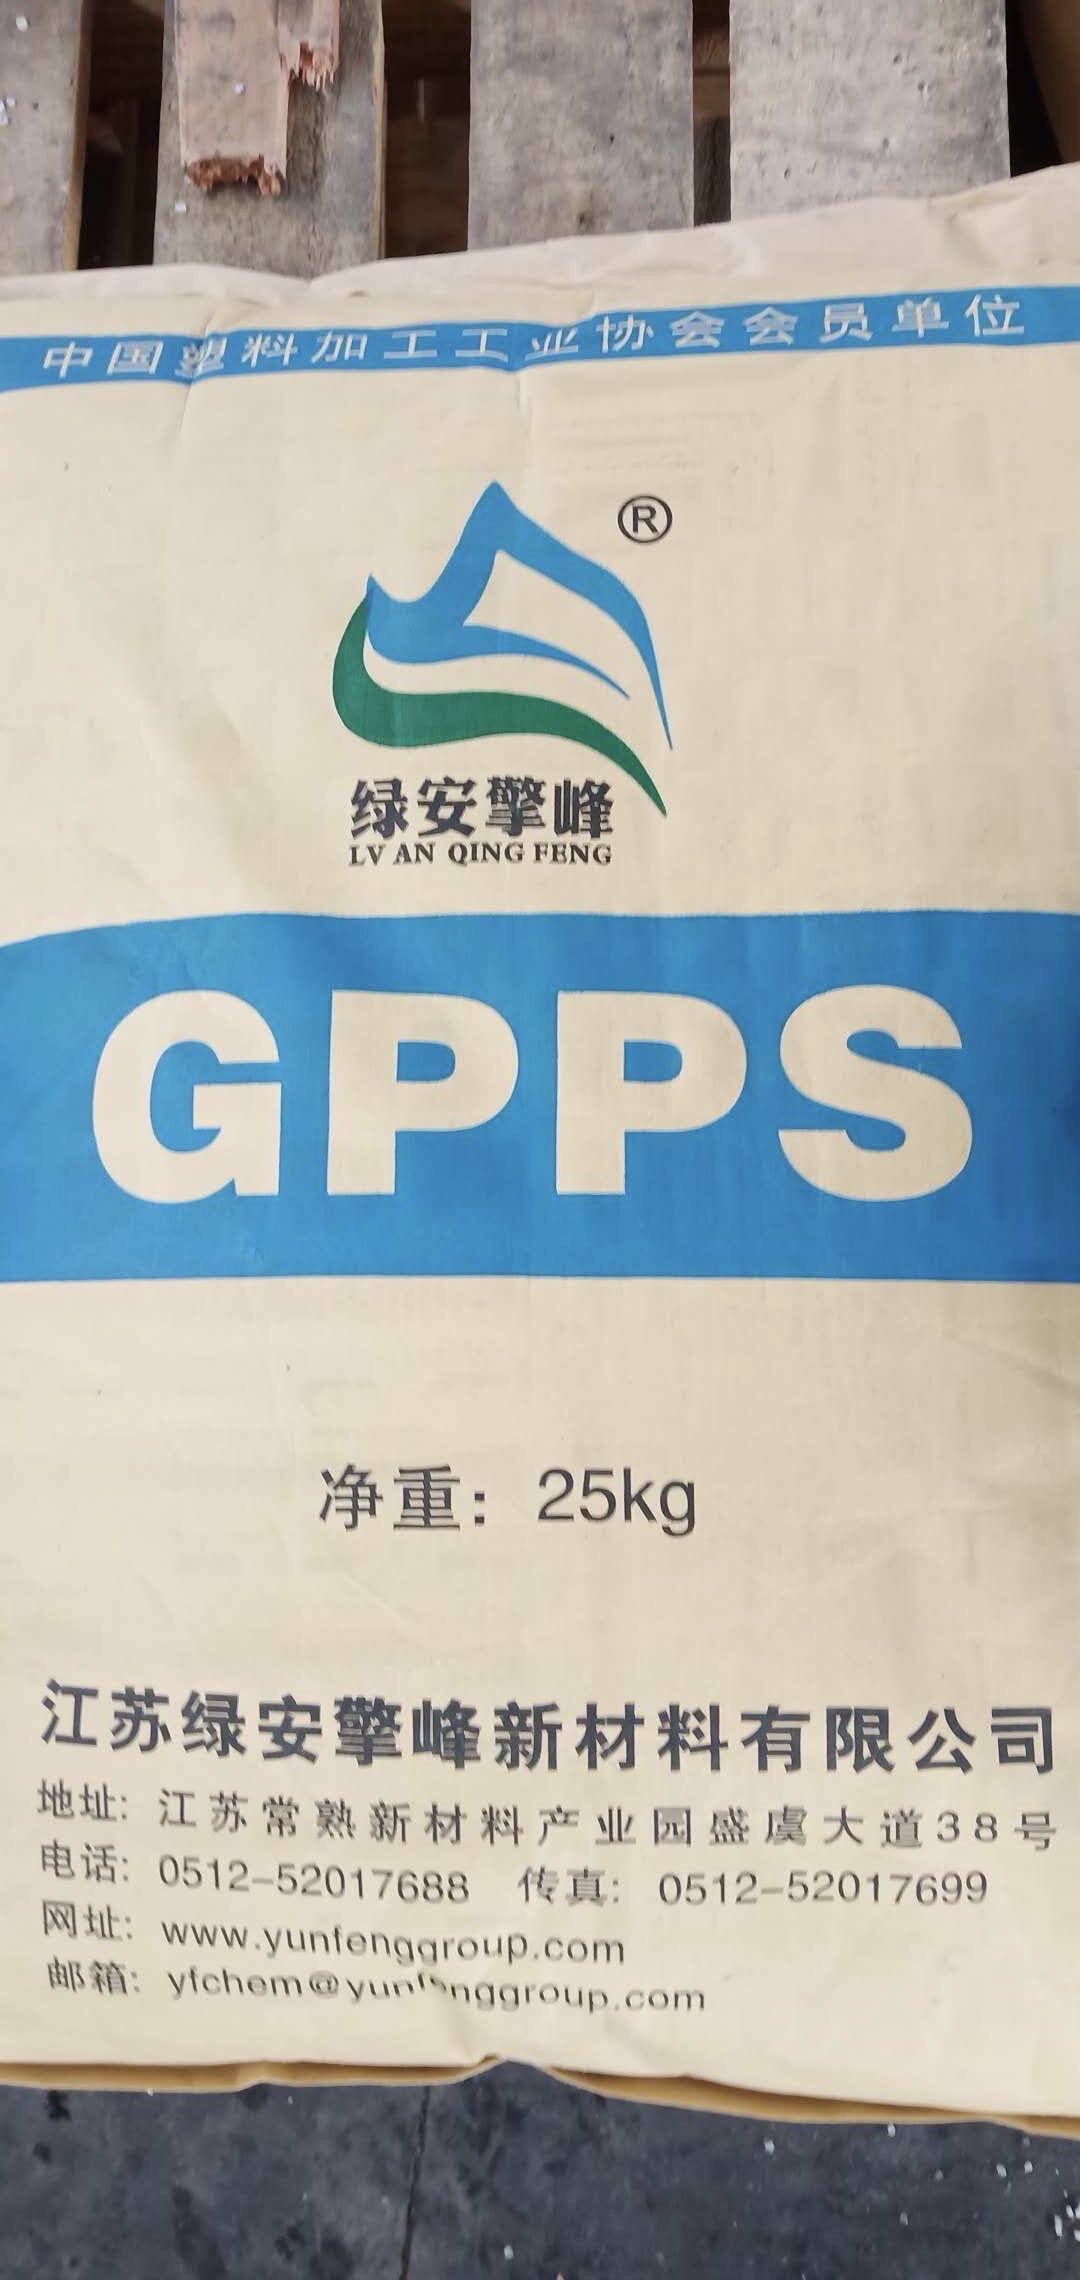 GPPS 绿安擎峰 GP-525 透明级2